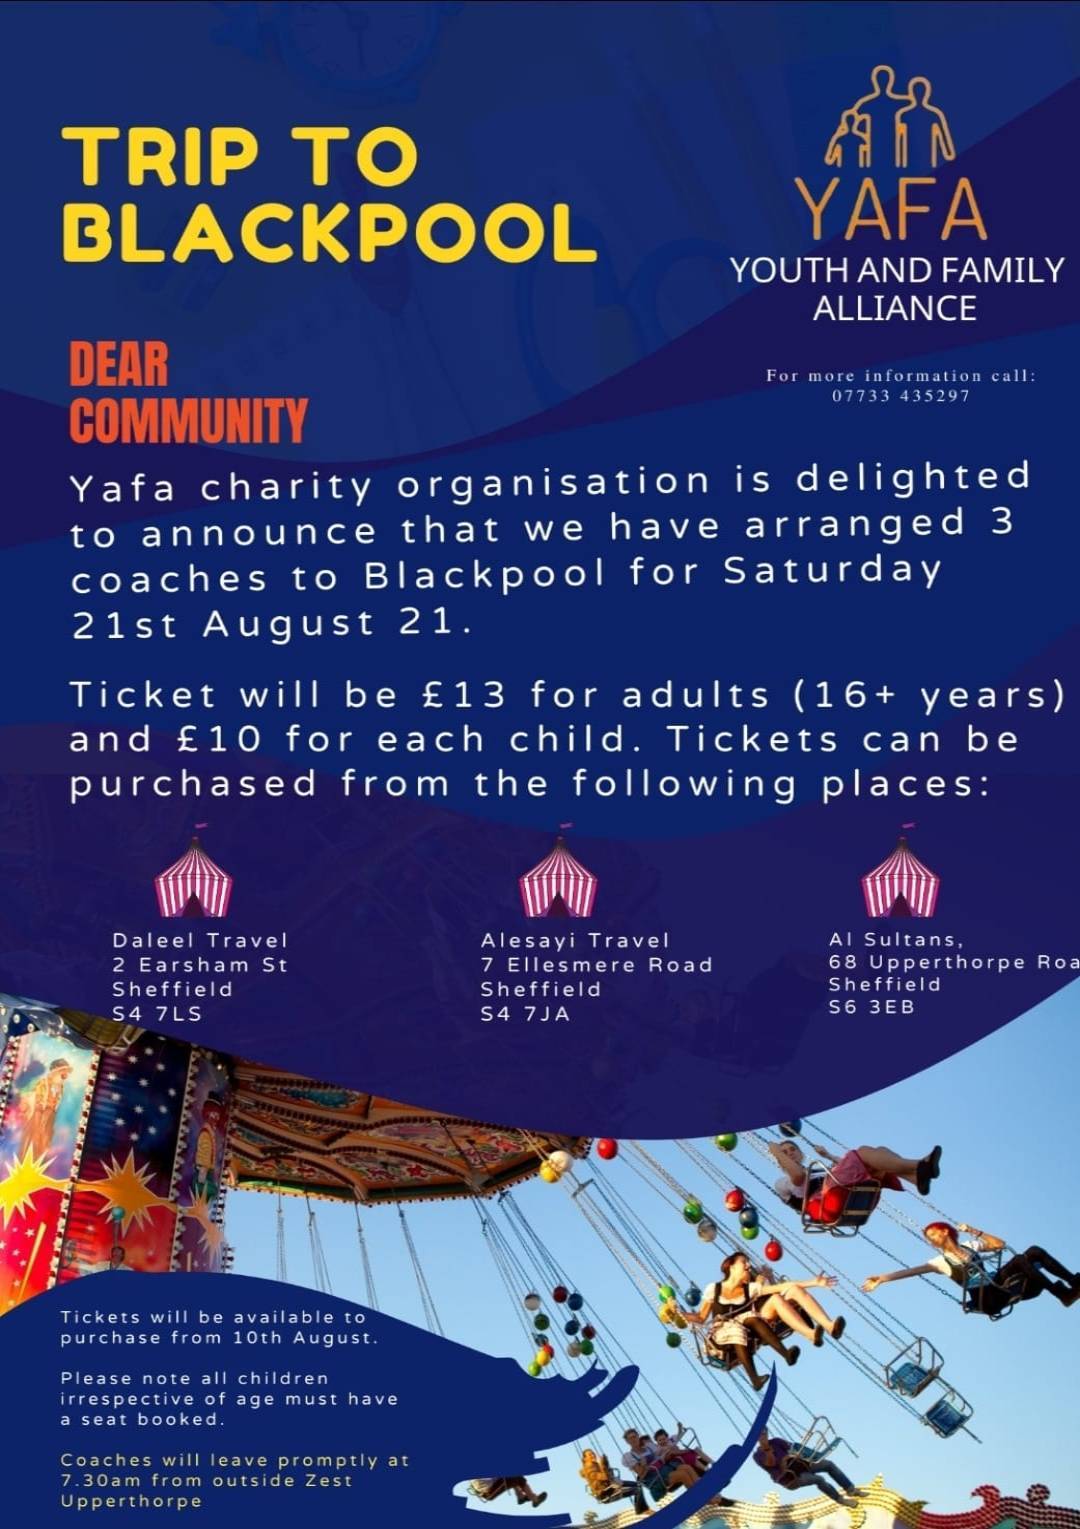 Blackpool Summer 2021 Trip Poster